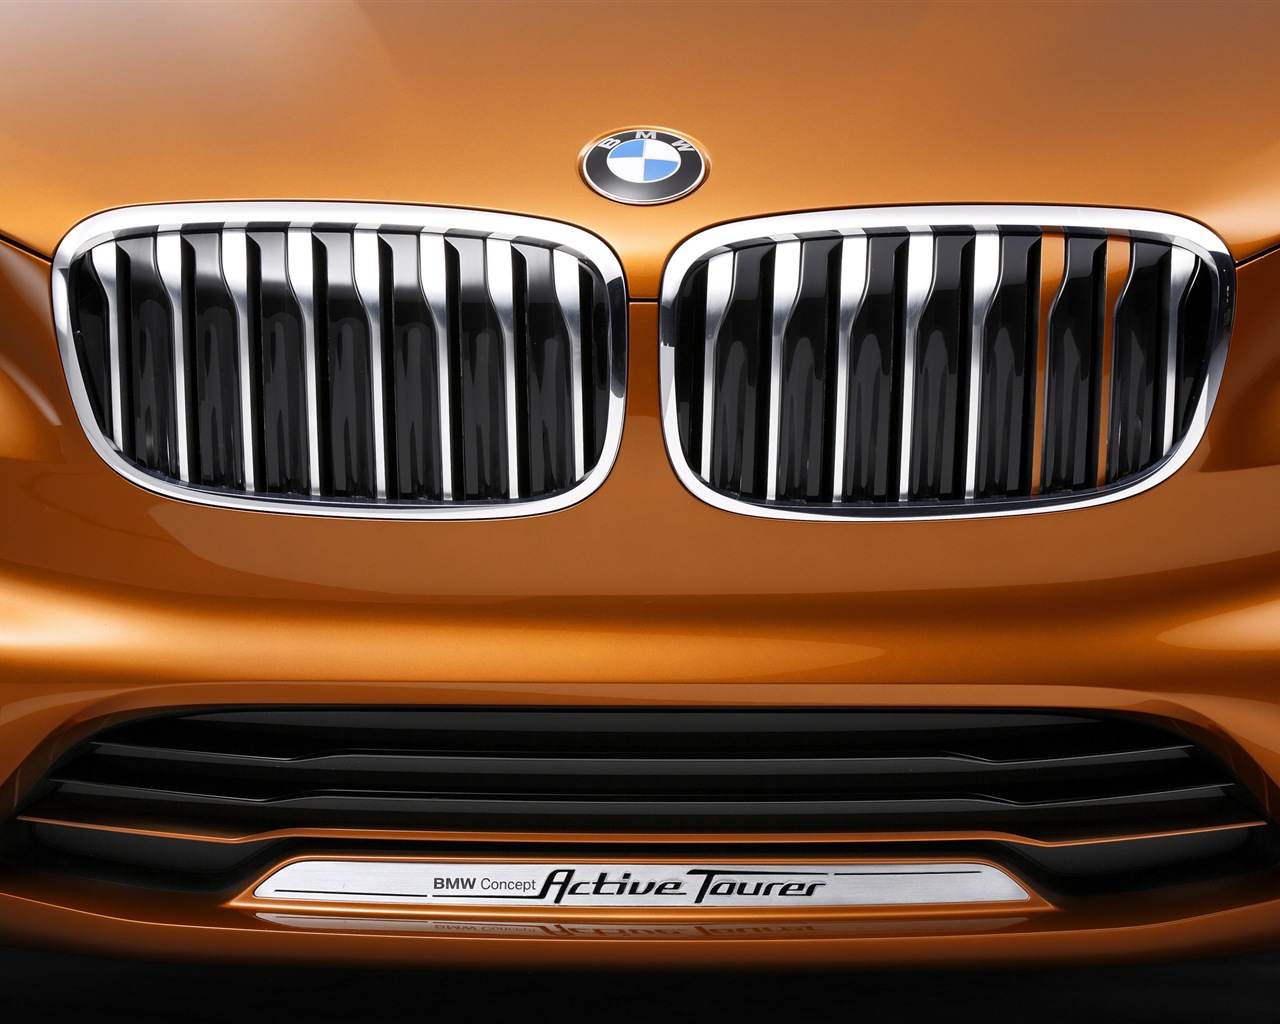 2013 BMW Concept Active Tourer 寶馬旅行車 高清壁紙 #15 - 1280x1024